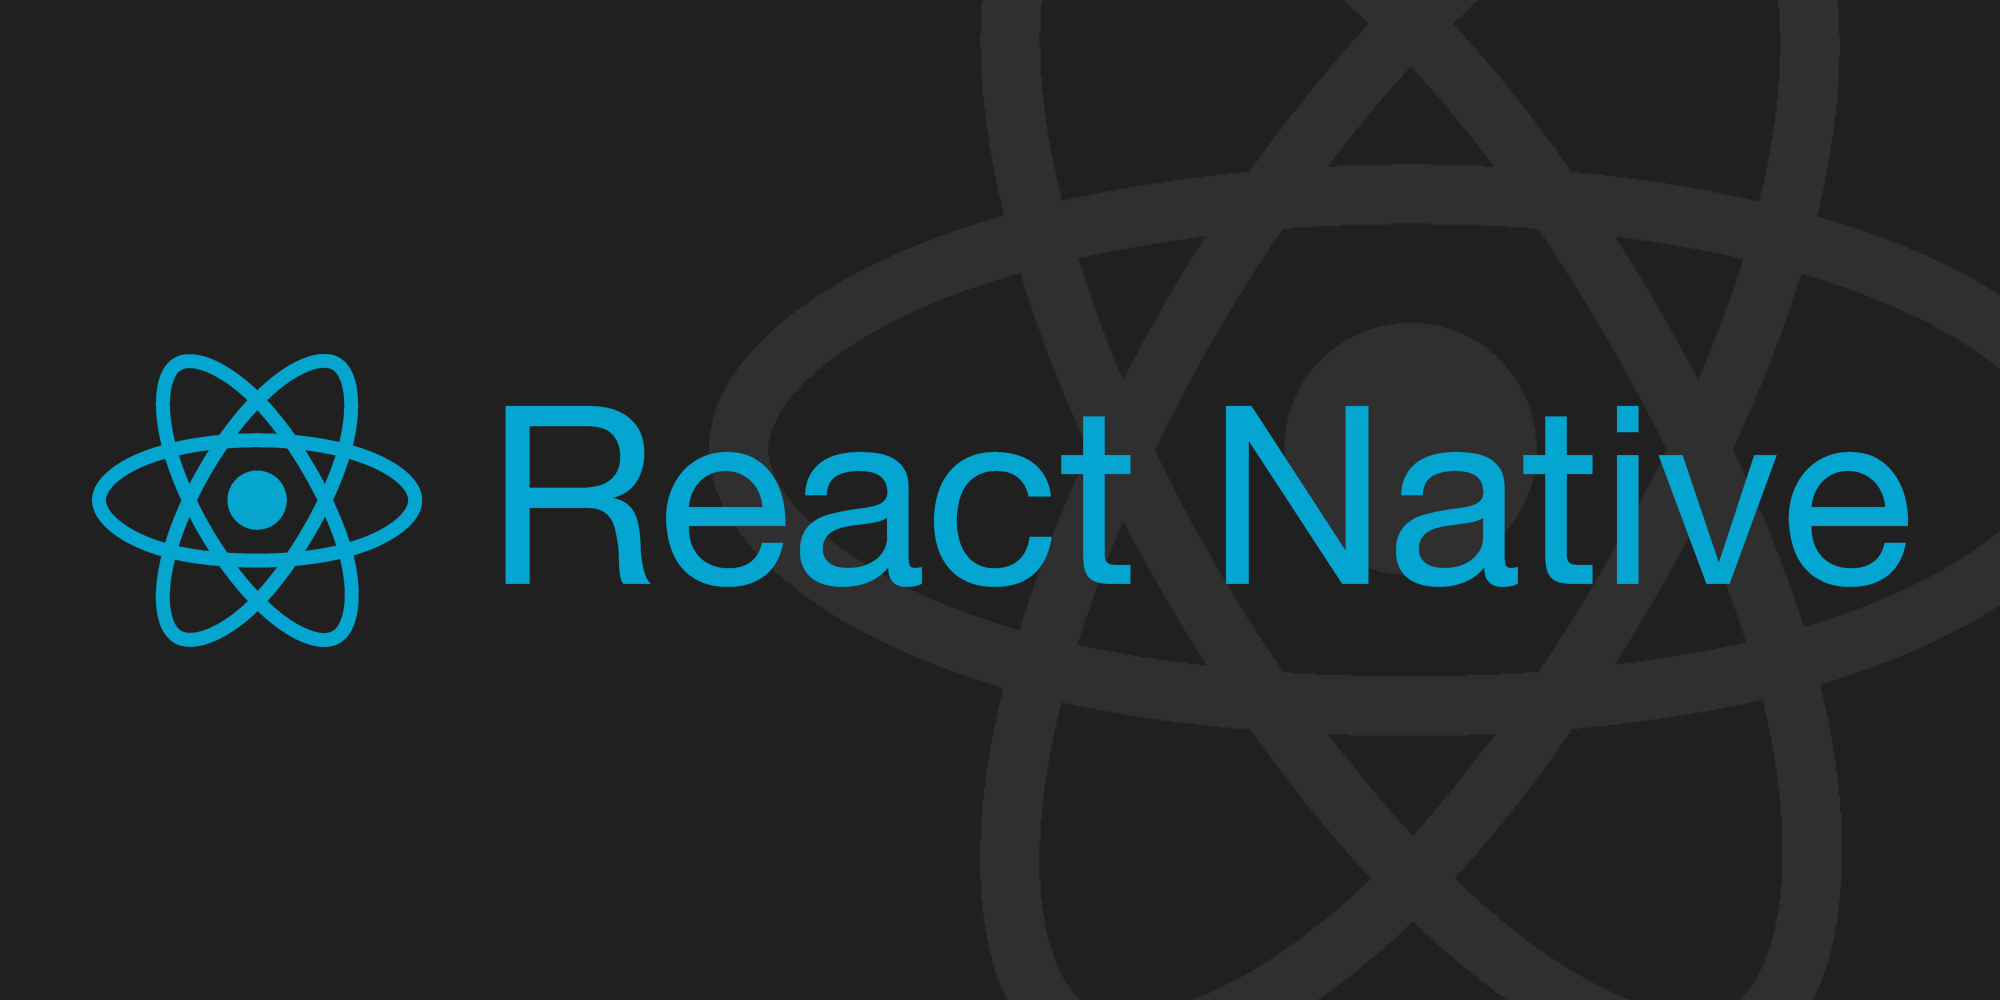 React Native Development